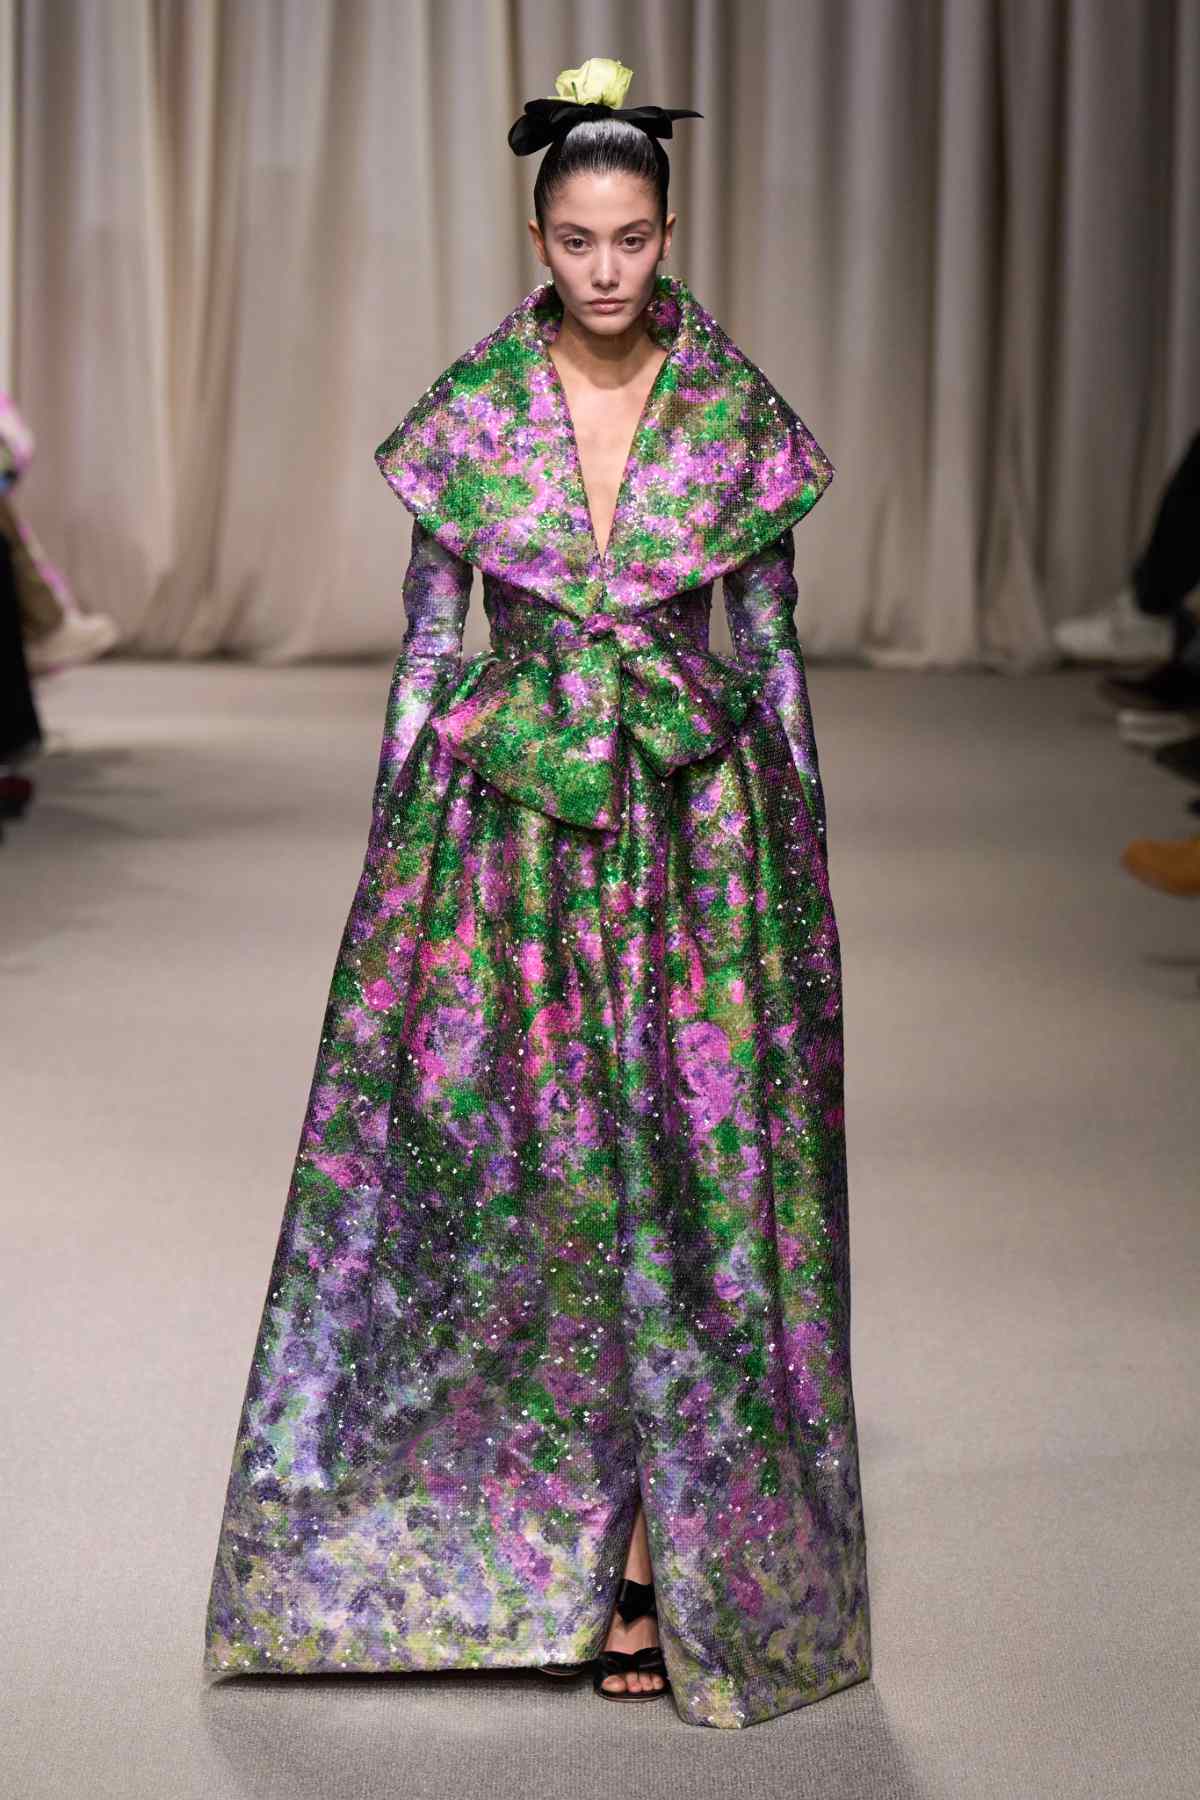 Giambattista Valli Presents His New Haute Couture N°26 Collection